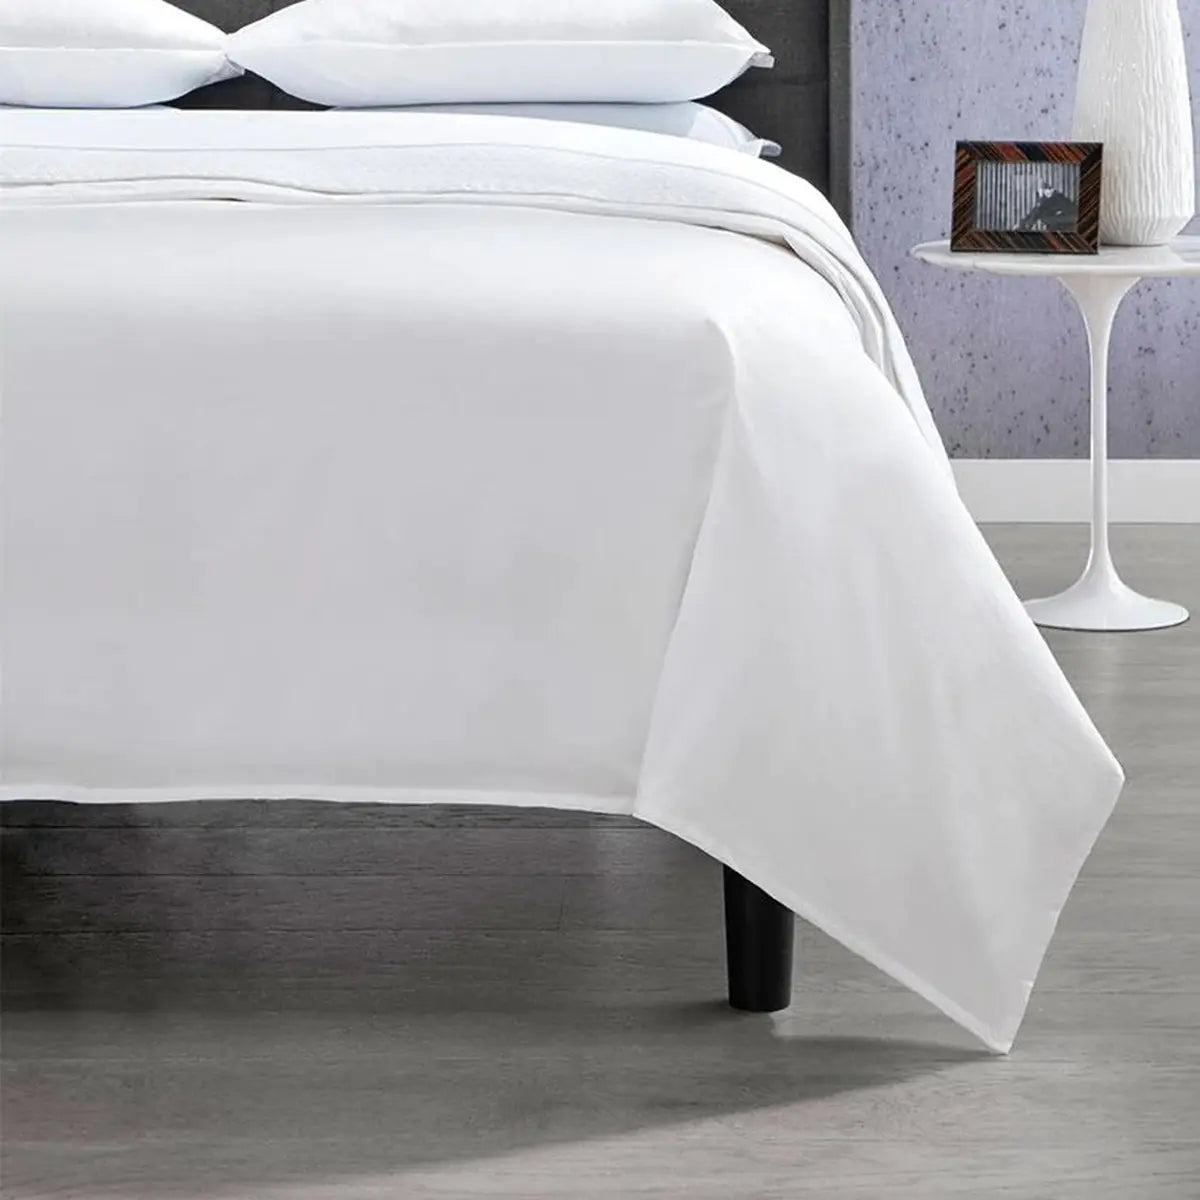 Sferra Corto Celeste Duvet Cover on a bed